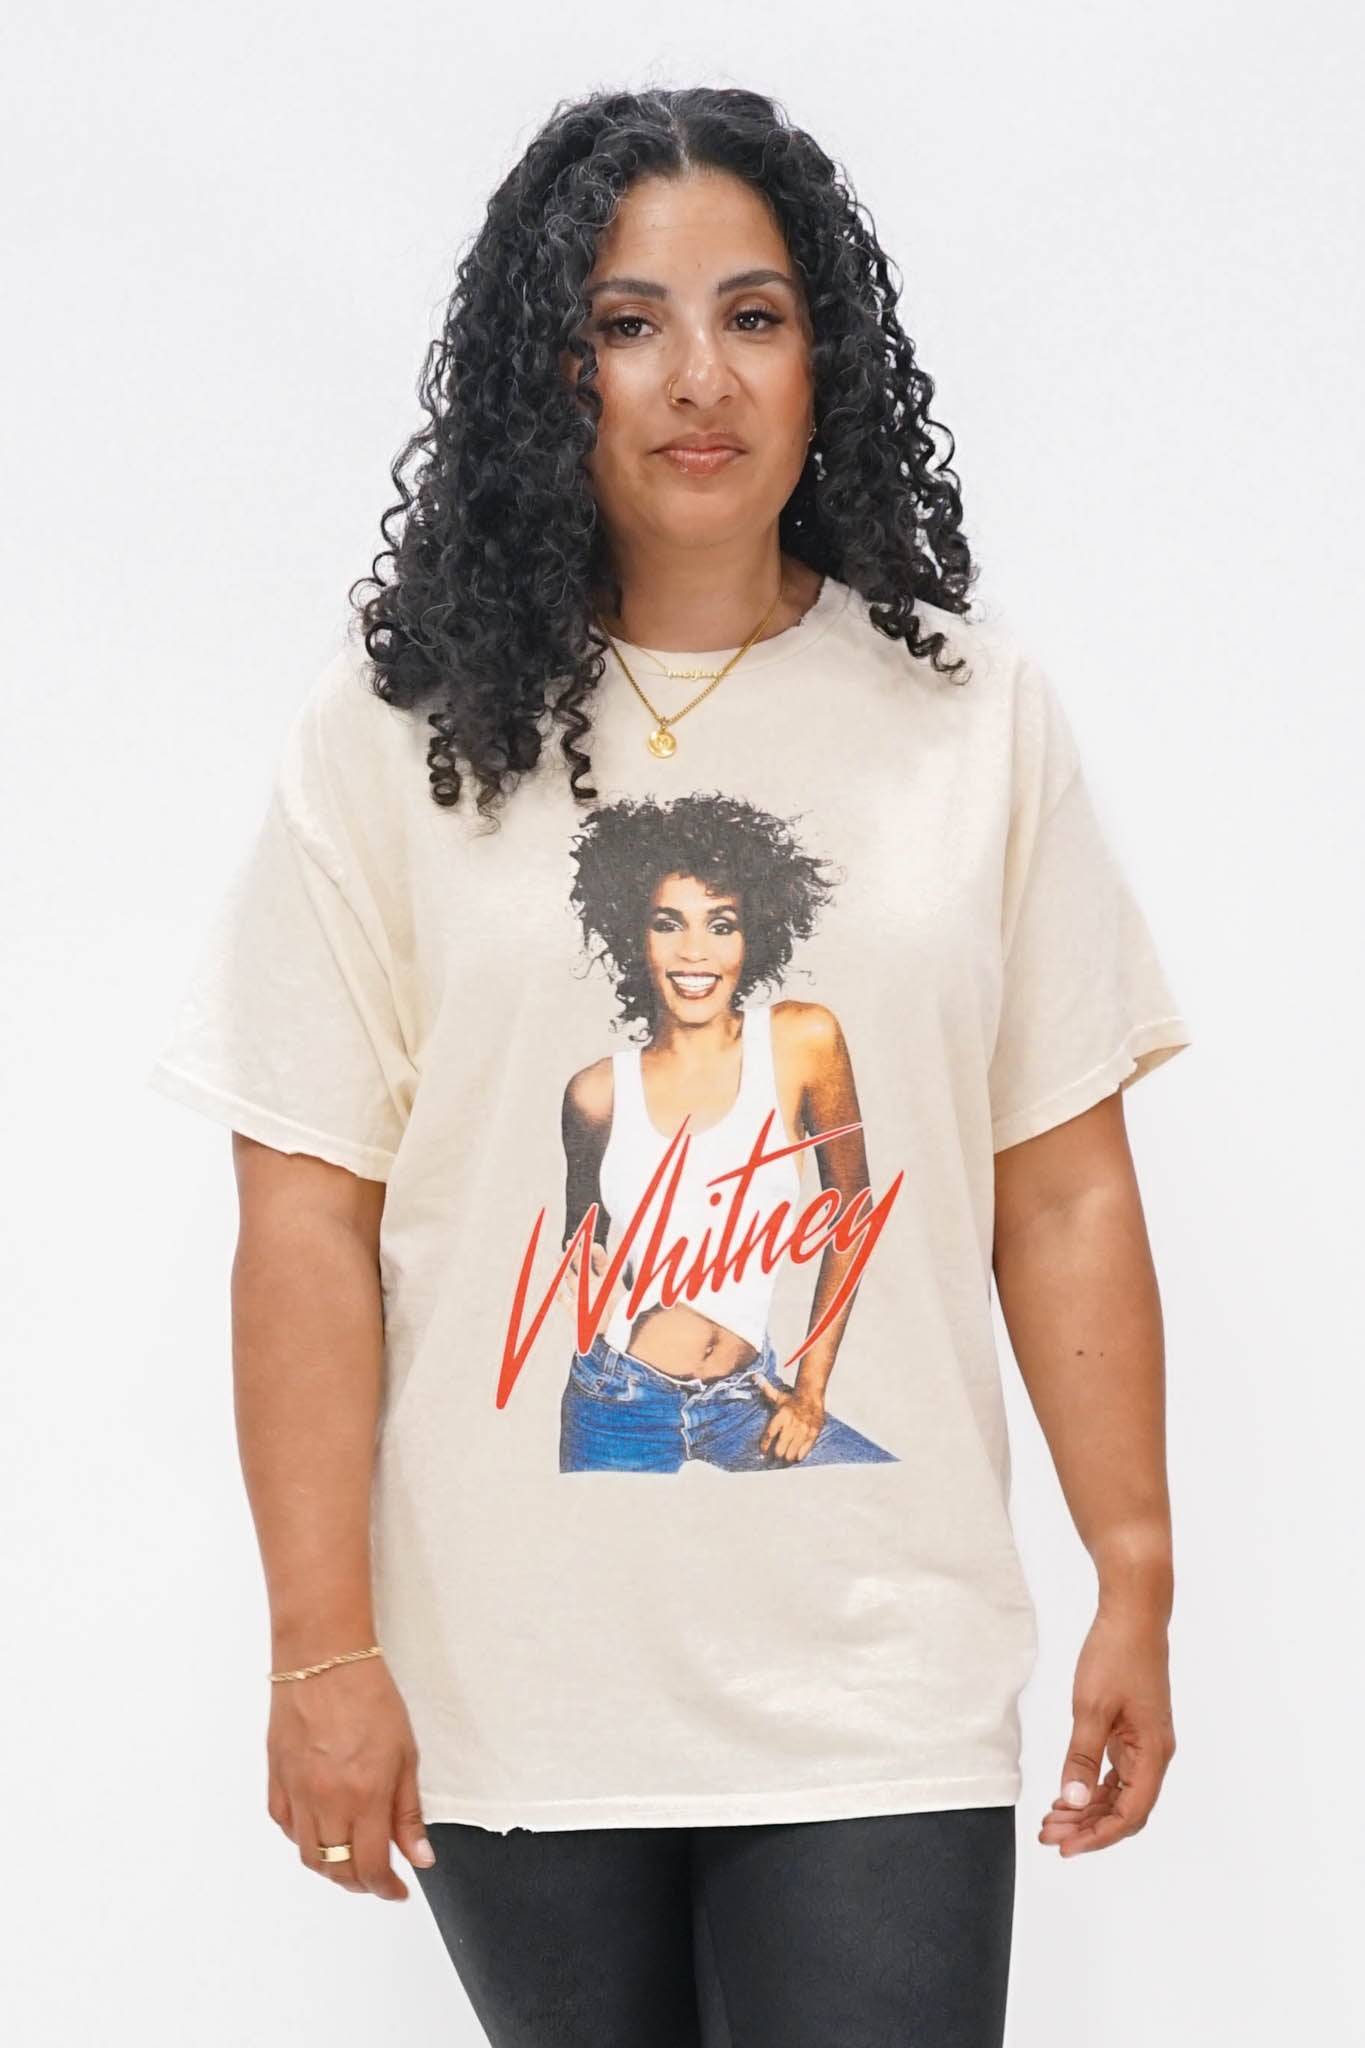 Whitney Houston Self Portrait Vintage Graphic T-Shirt